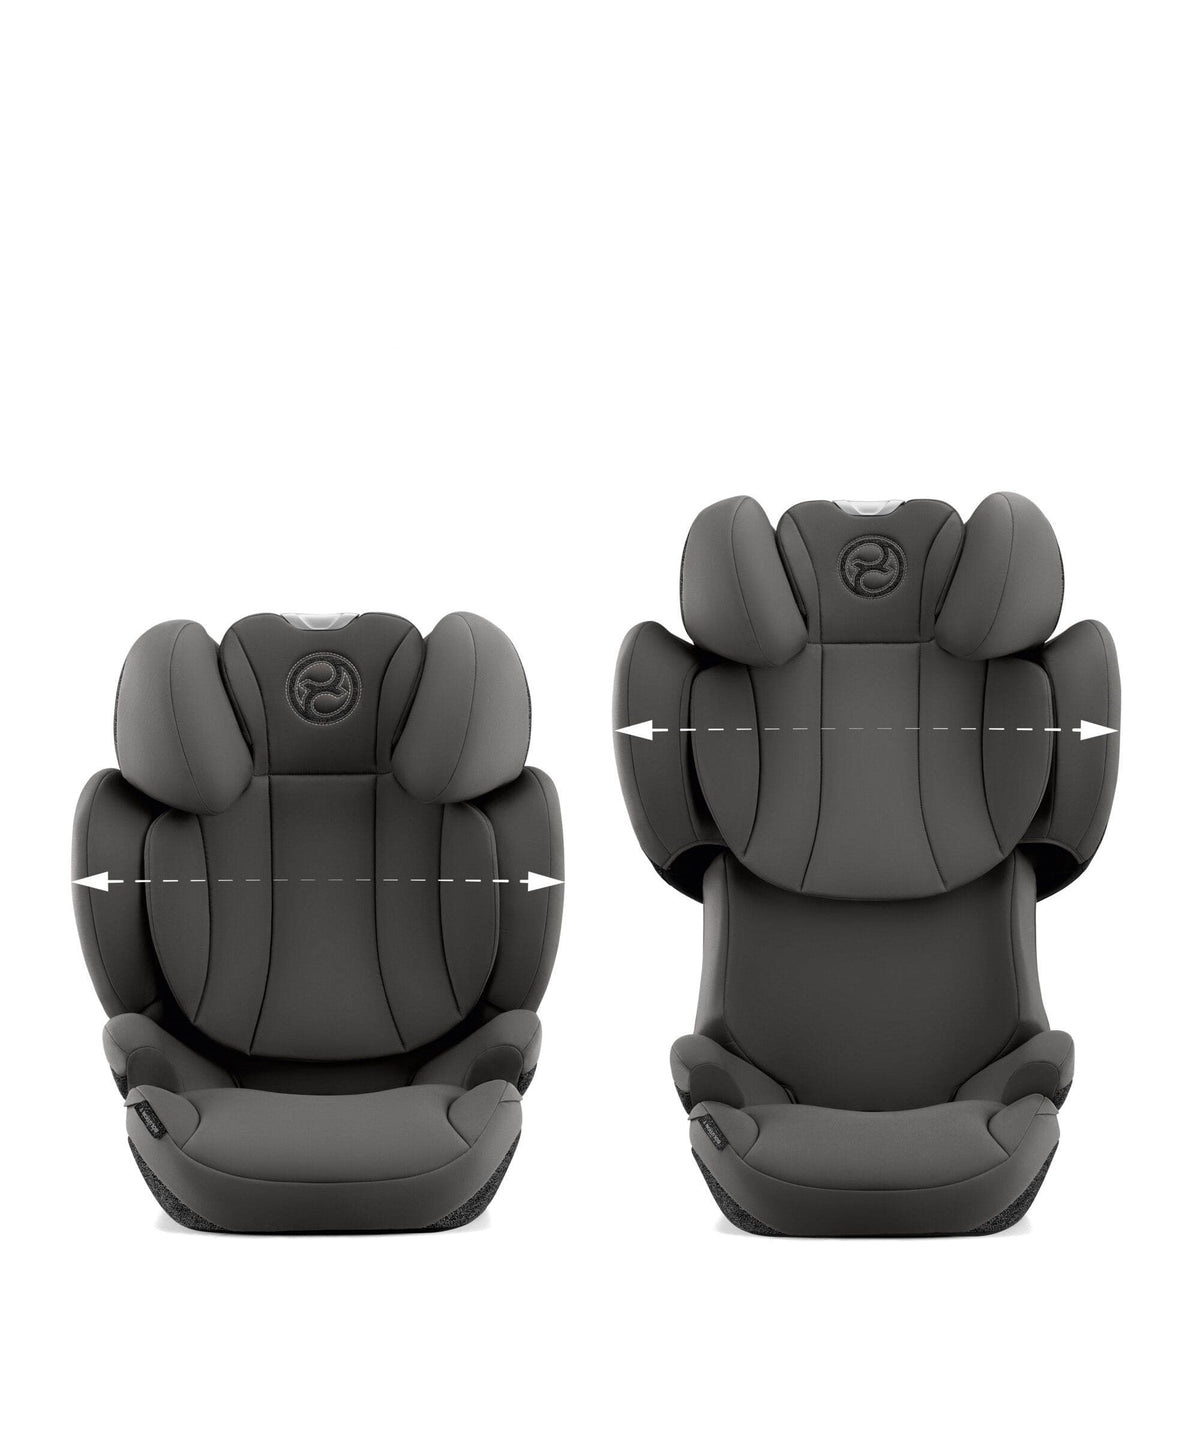 Cybex Solution Z-Fix Booster Car Seat